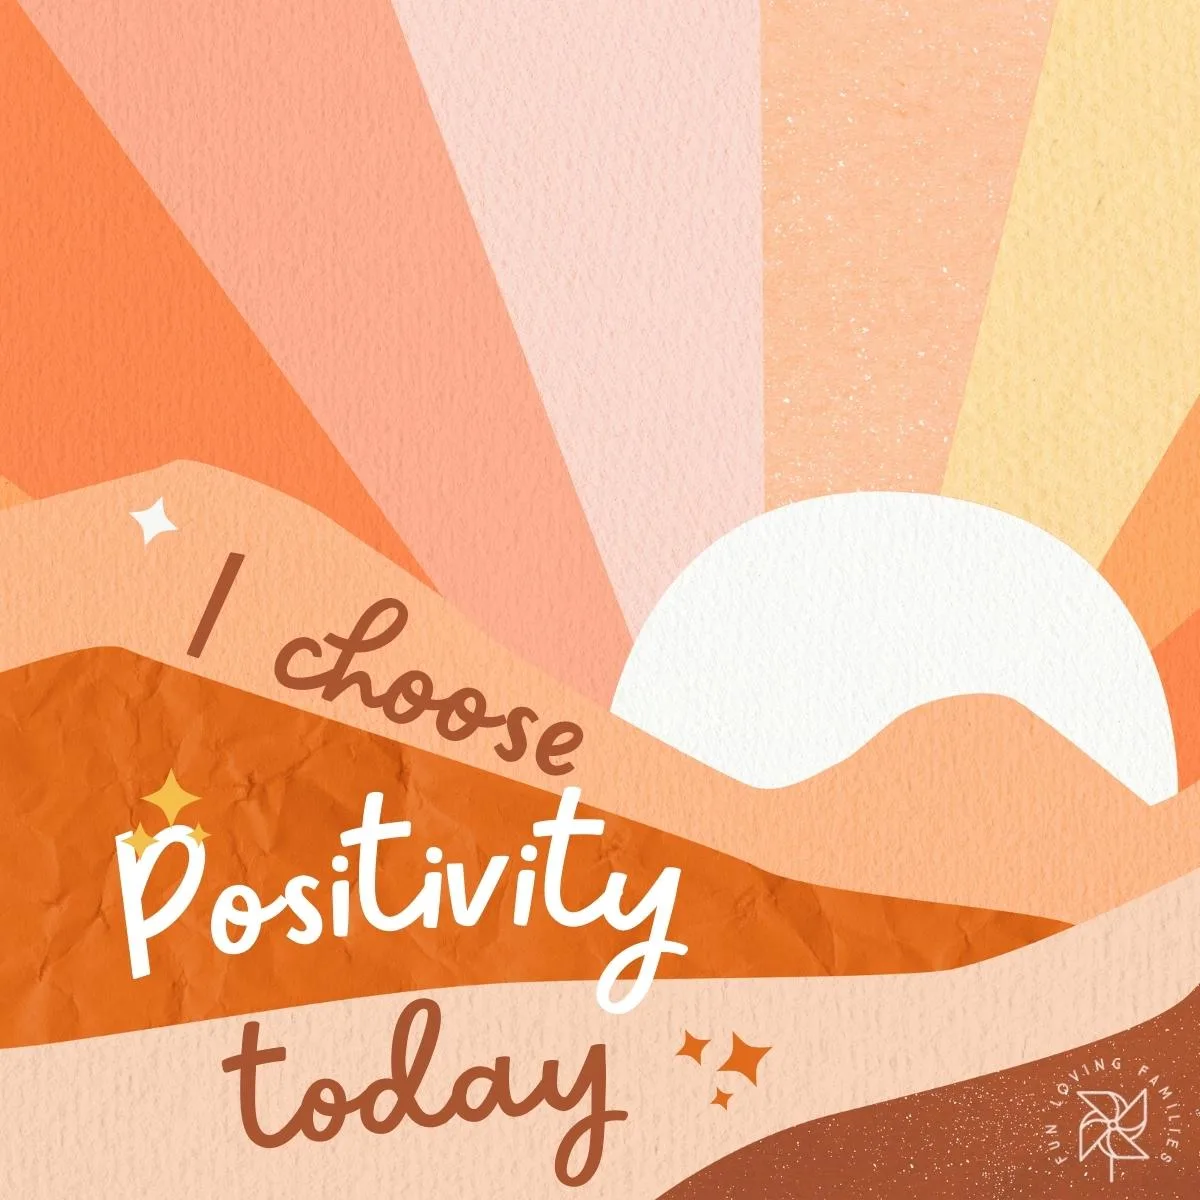 I choose posivity today affirmation.